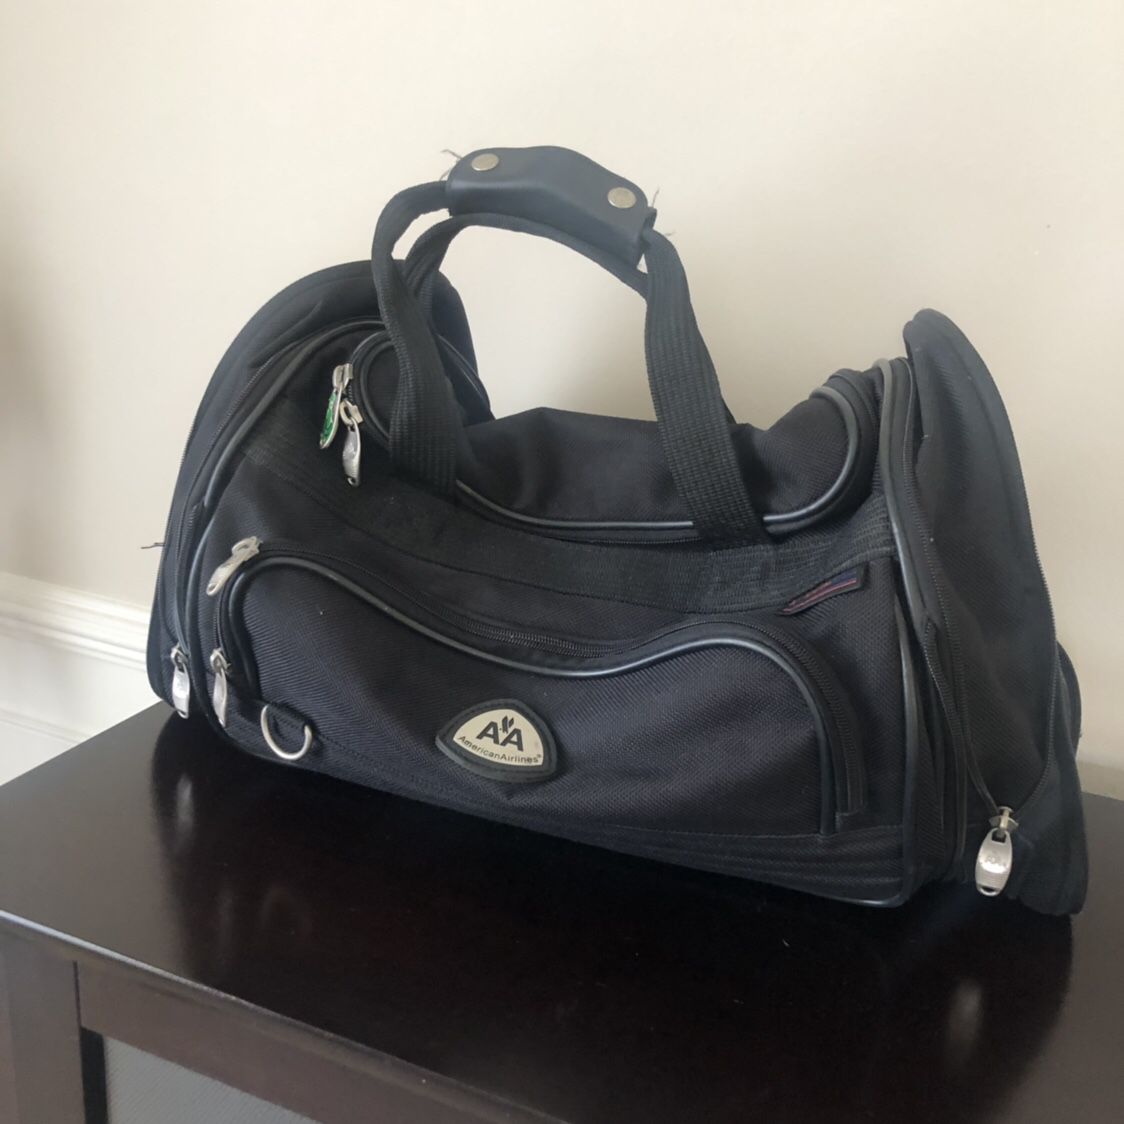 Gym Travel Carry-on Bag, Black, Duffle Bag